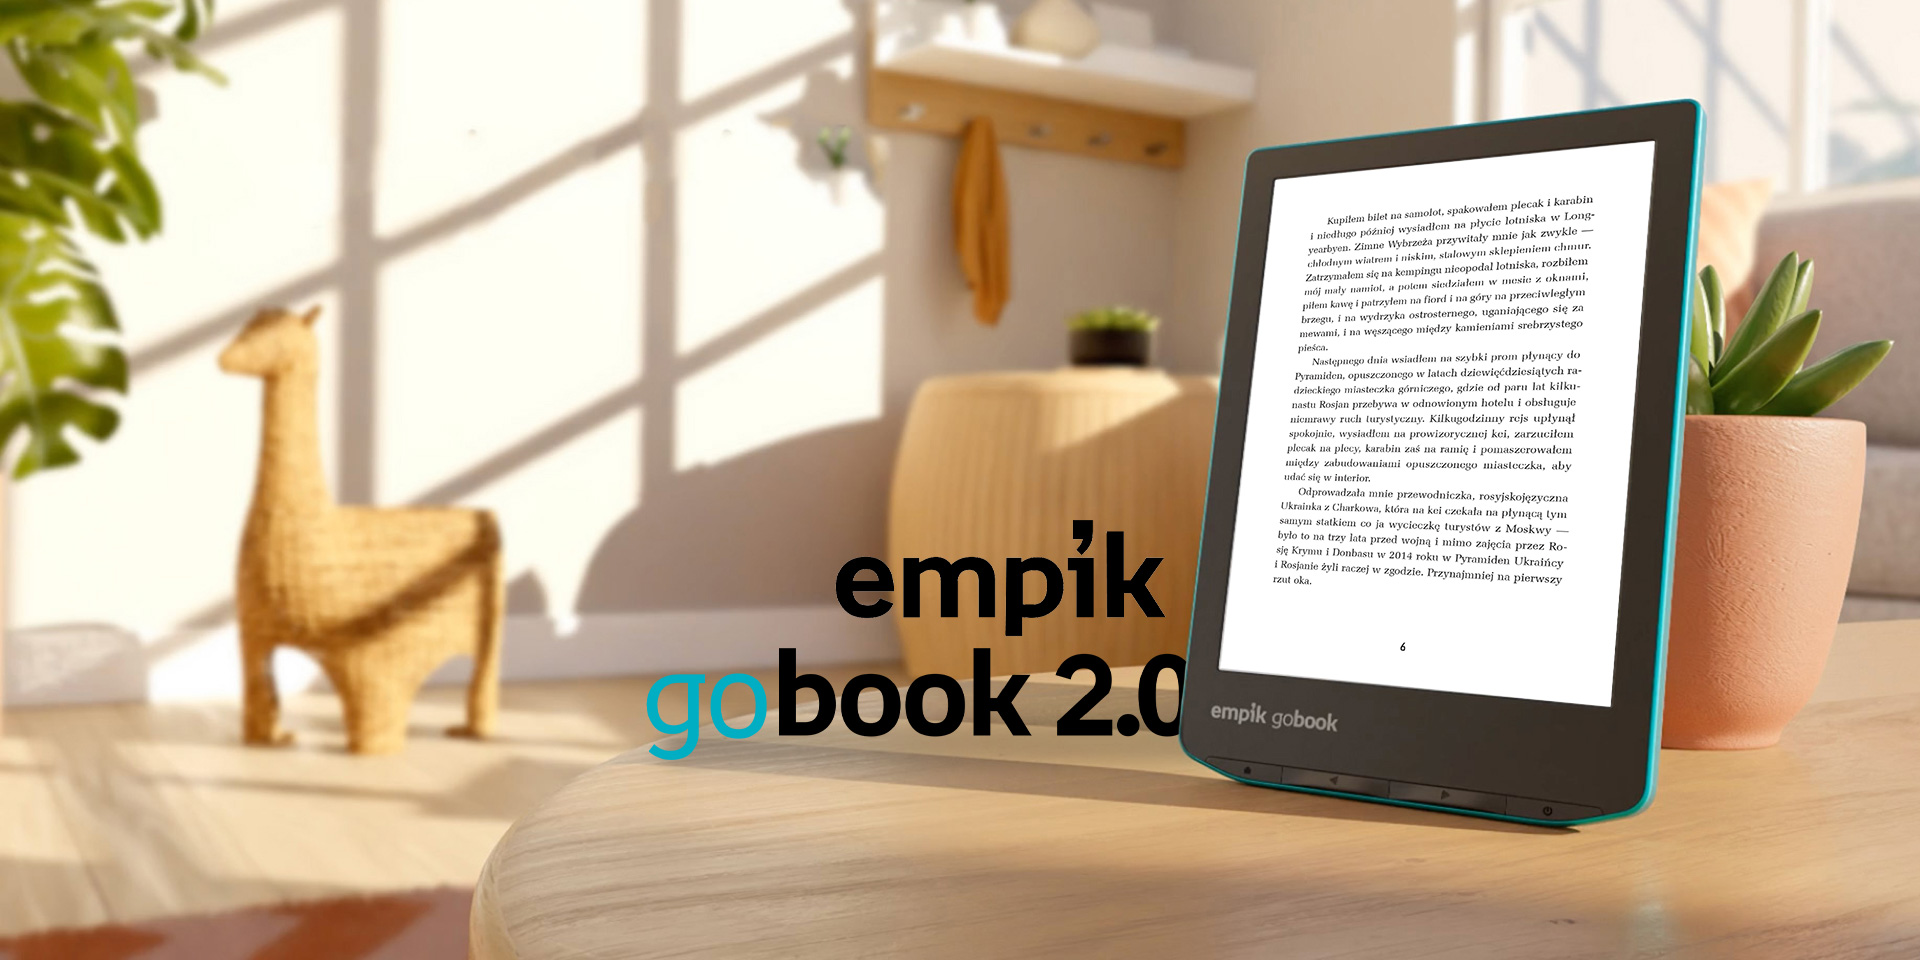 empik gobook 2.0 grafika czytnik e-booków